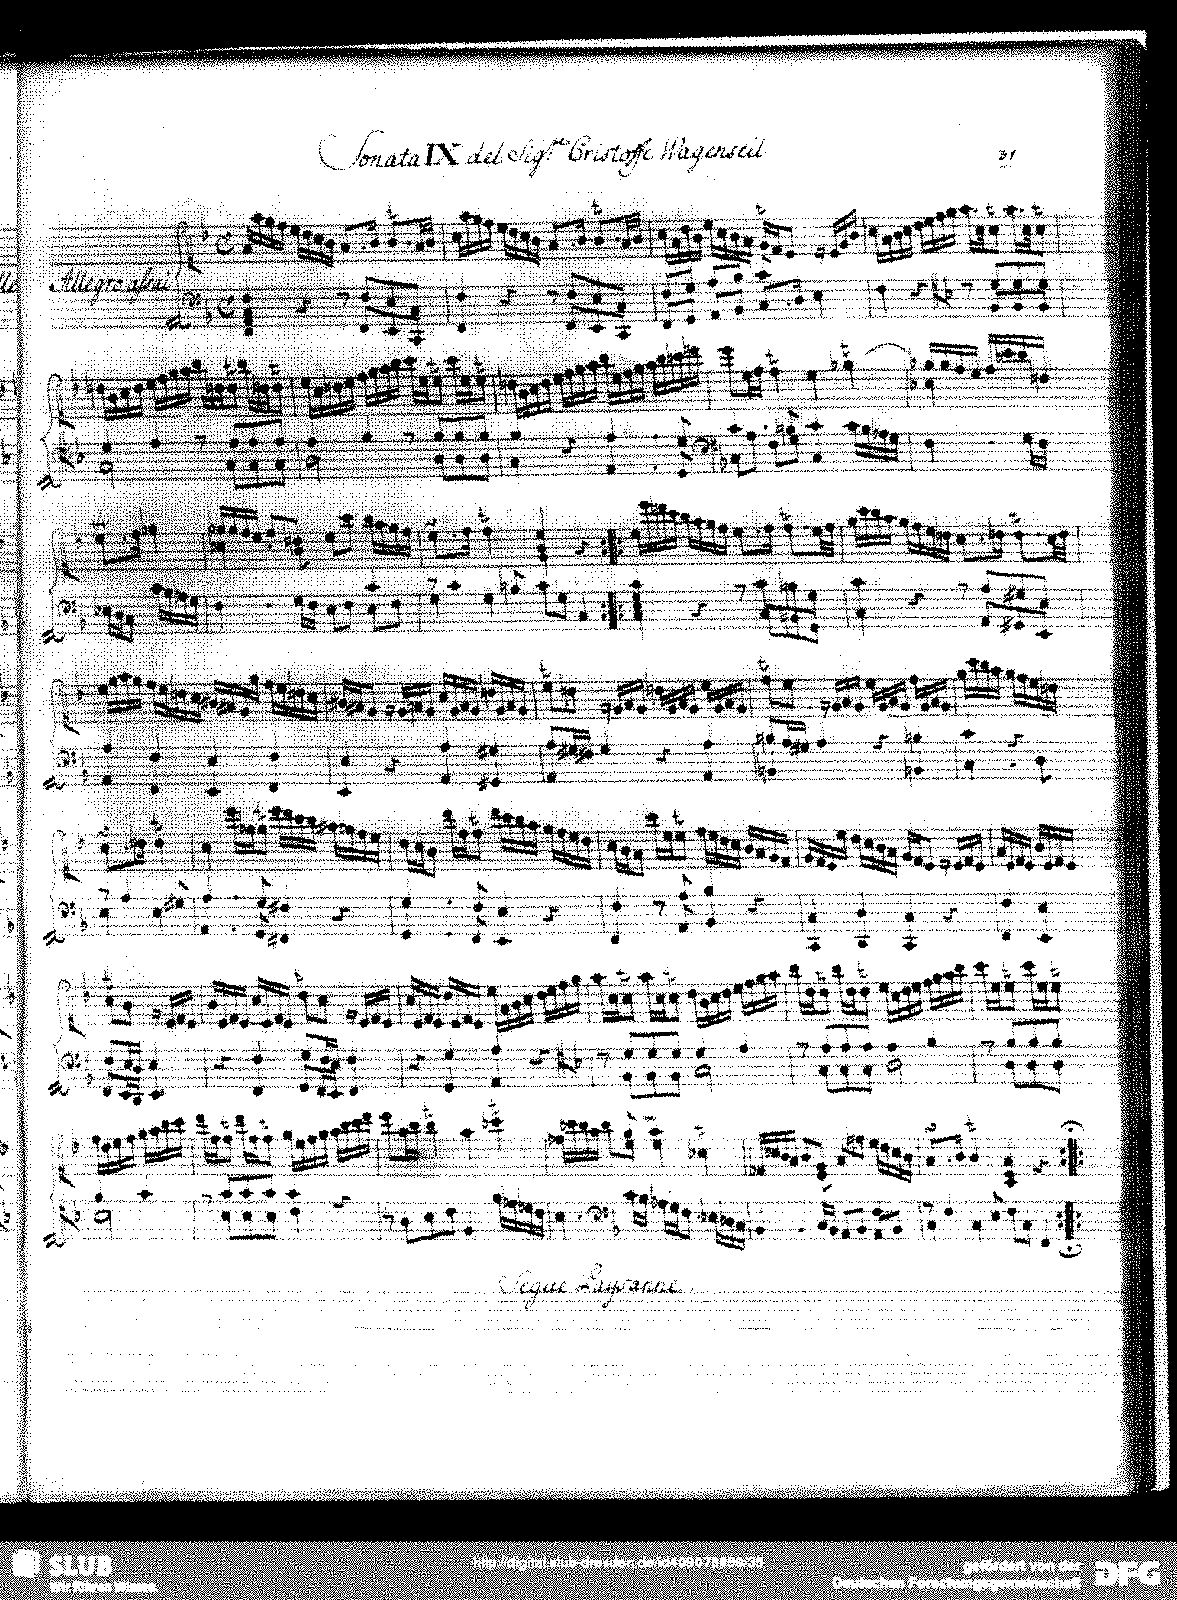 Keyboard Sonata in F major, WV 46 (Wagenseil, Georg Christoph) - IMSLP